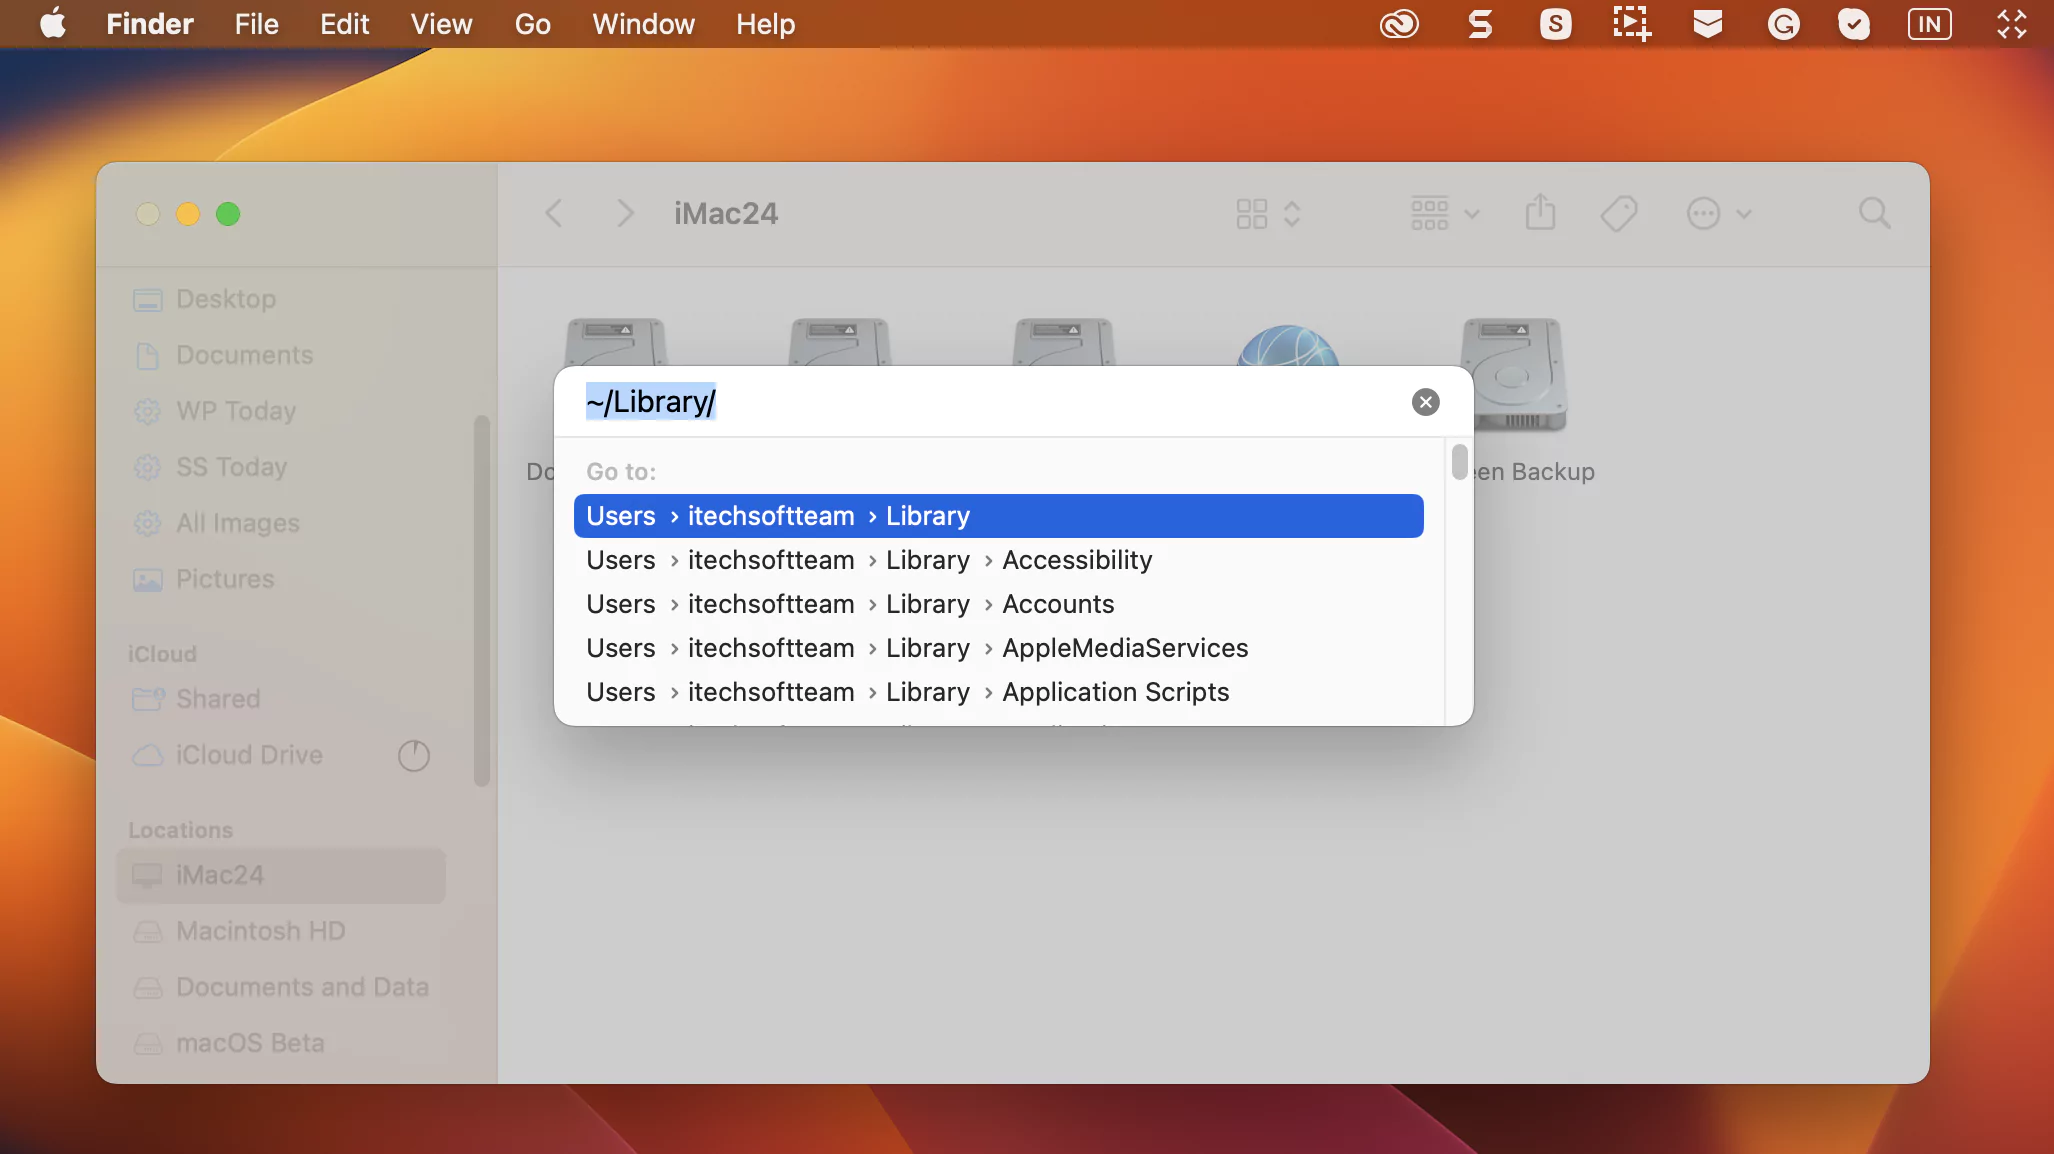 open-library-folder-on-mac-finder